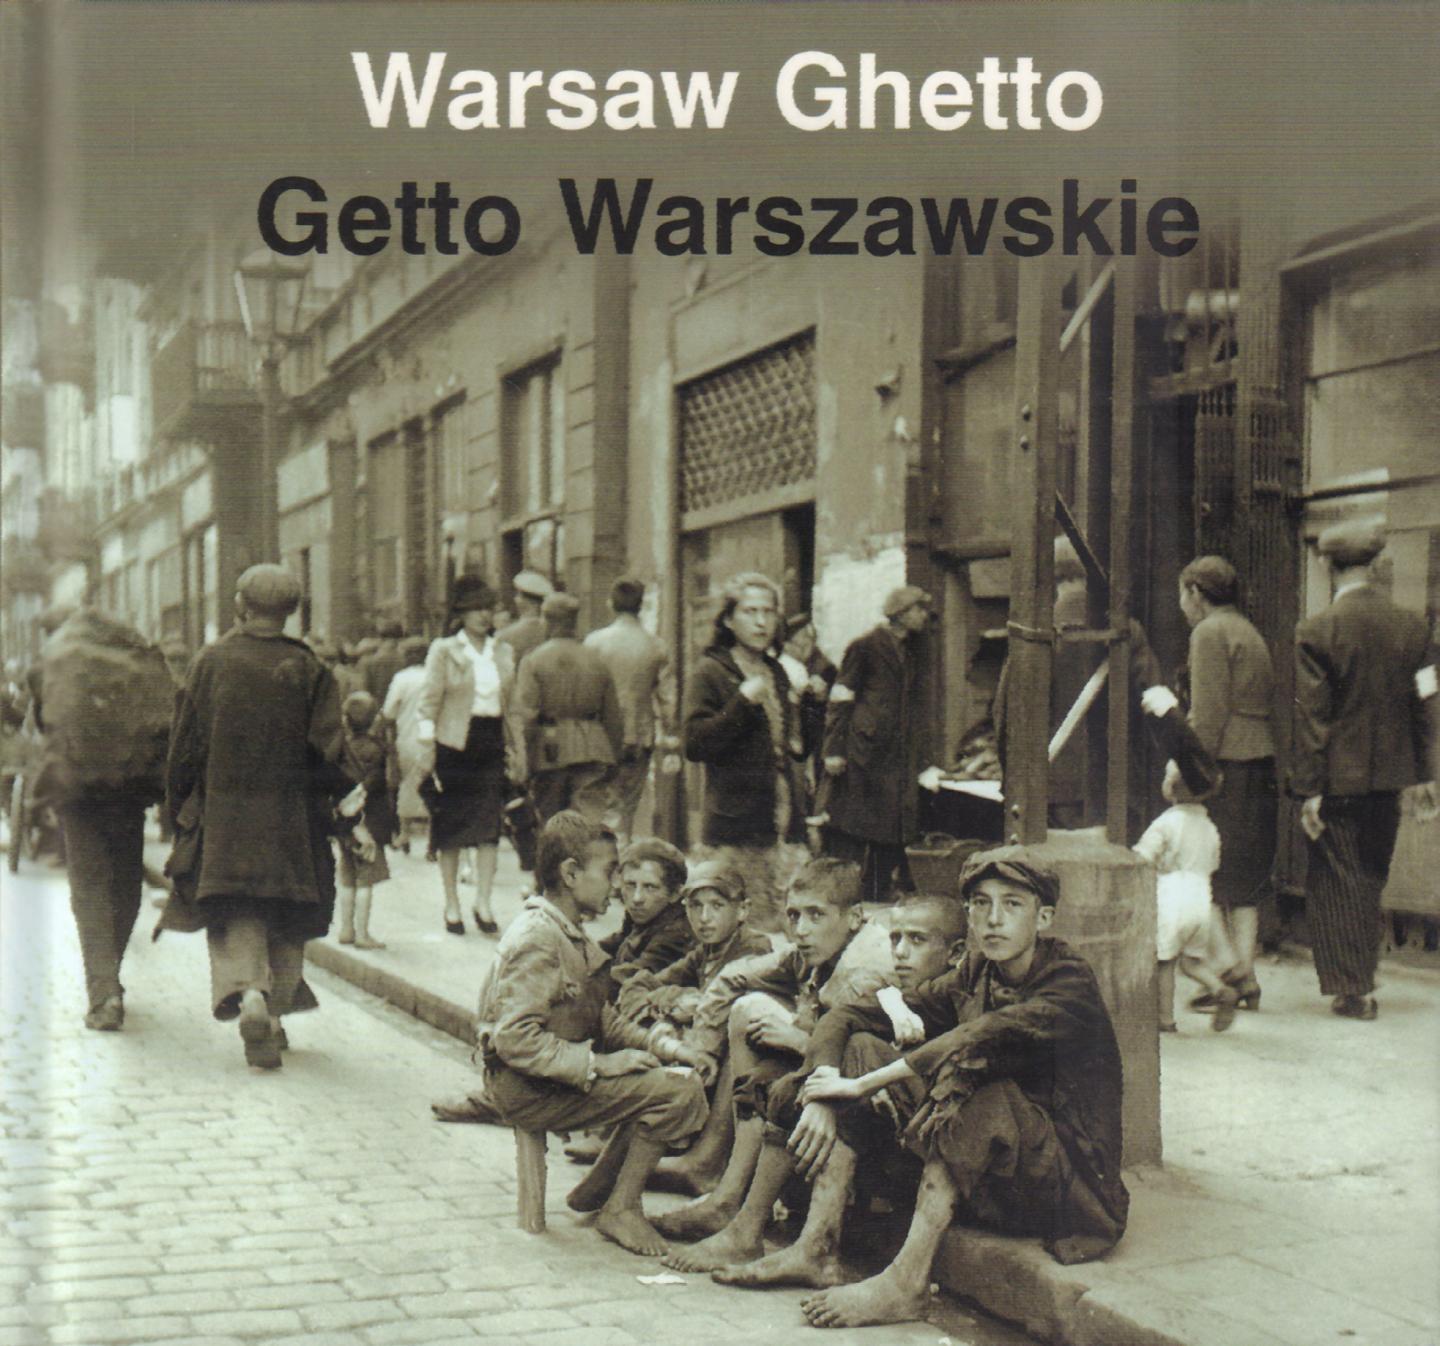 Grupinska, Anka, Jan Jagielski, Pawel Szapiro - Warsaw Ghetto / Getto Warszawskie, 95 pag. kleine hardcover, fotoboek met begeleidende tekst in het engels en pools, gave staat